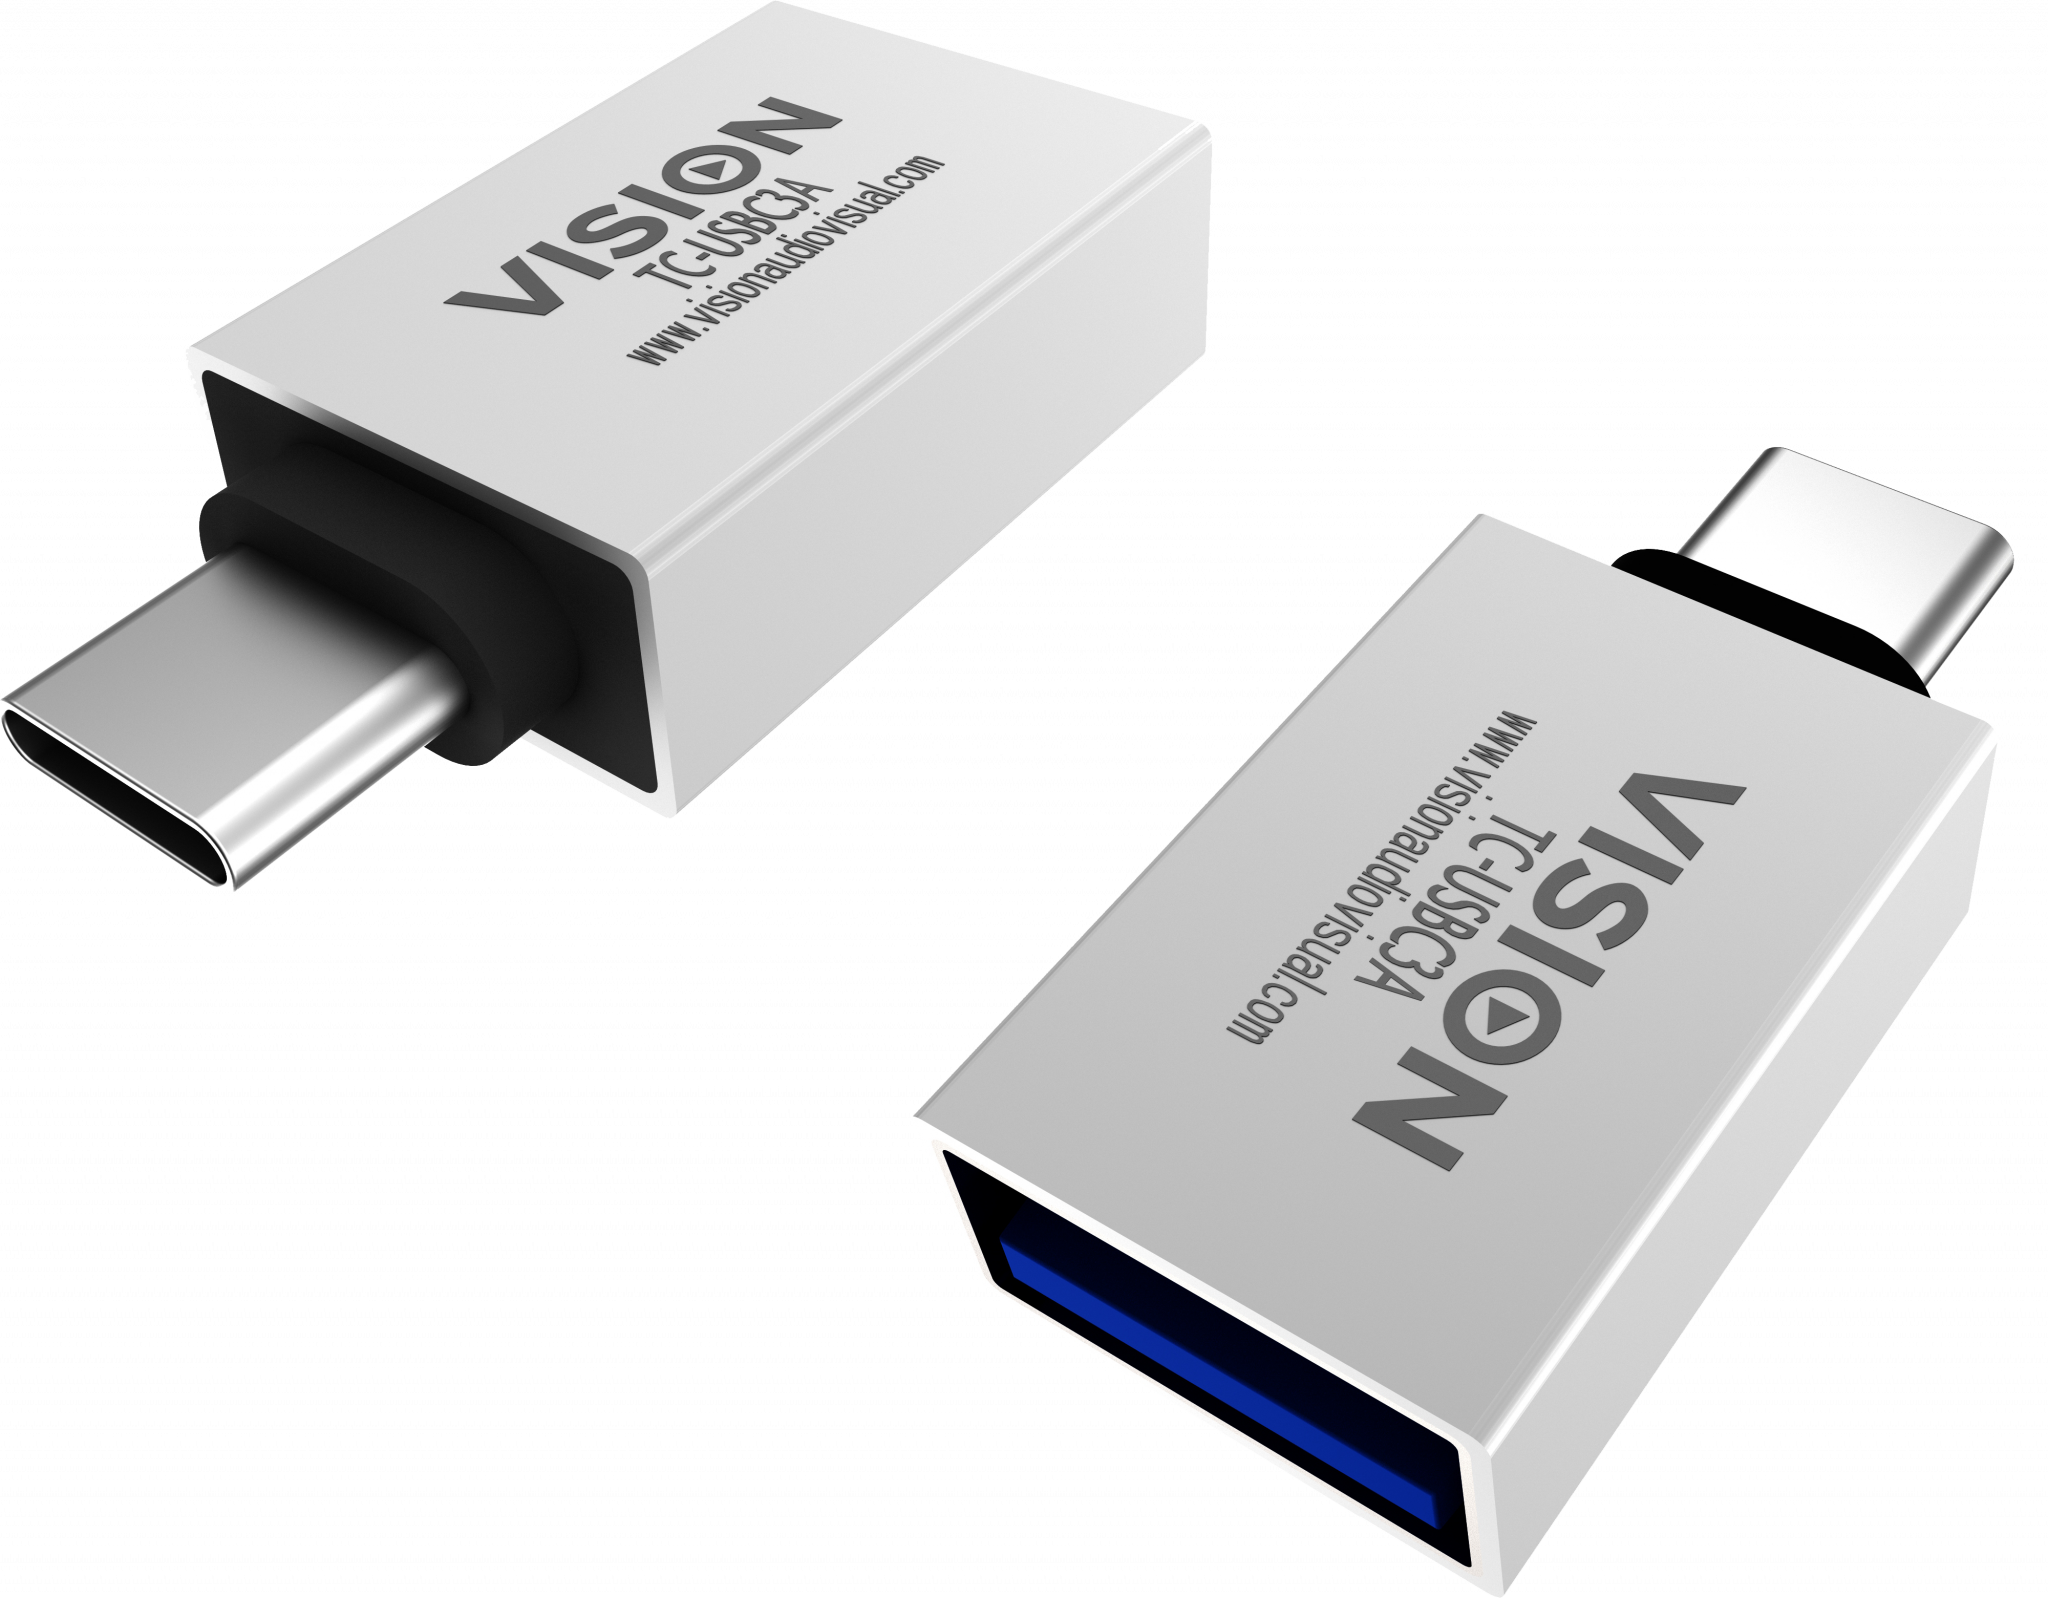 An image showing Adattatore professionale da USB-C a USB 3.0 Tipo A bianco